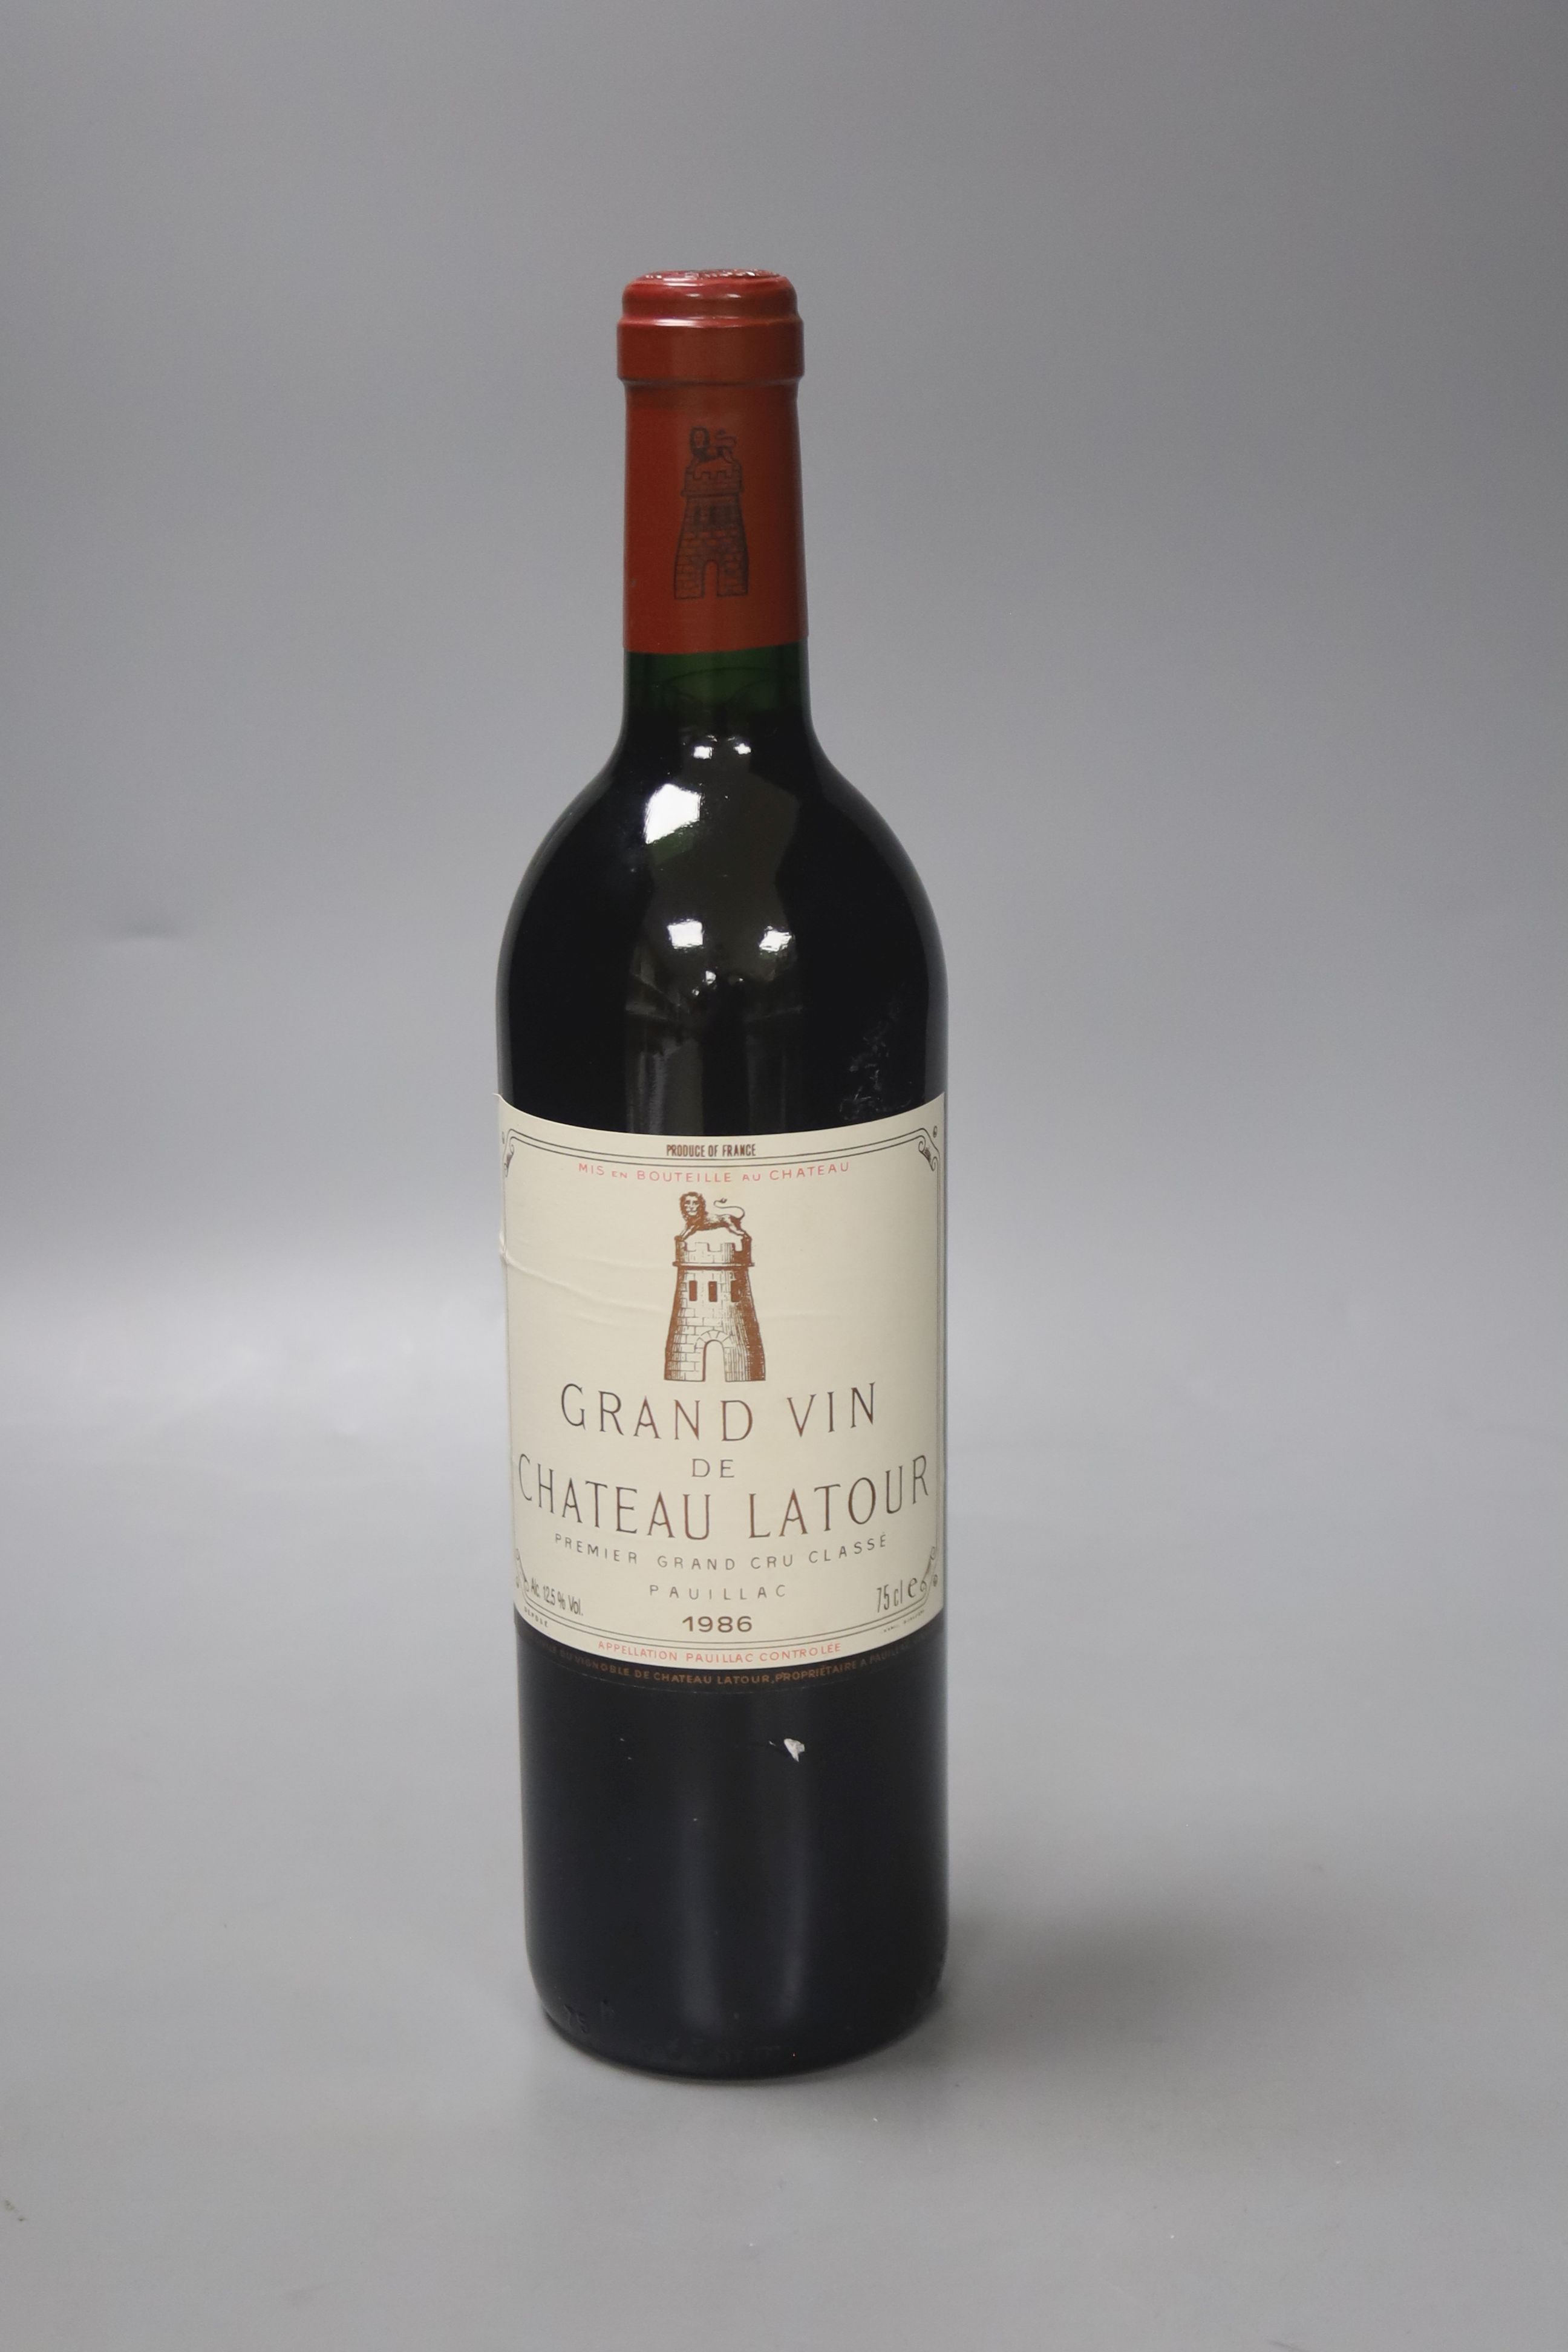 One bottle of Chateau Latour 1986